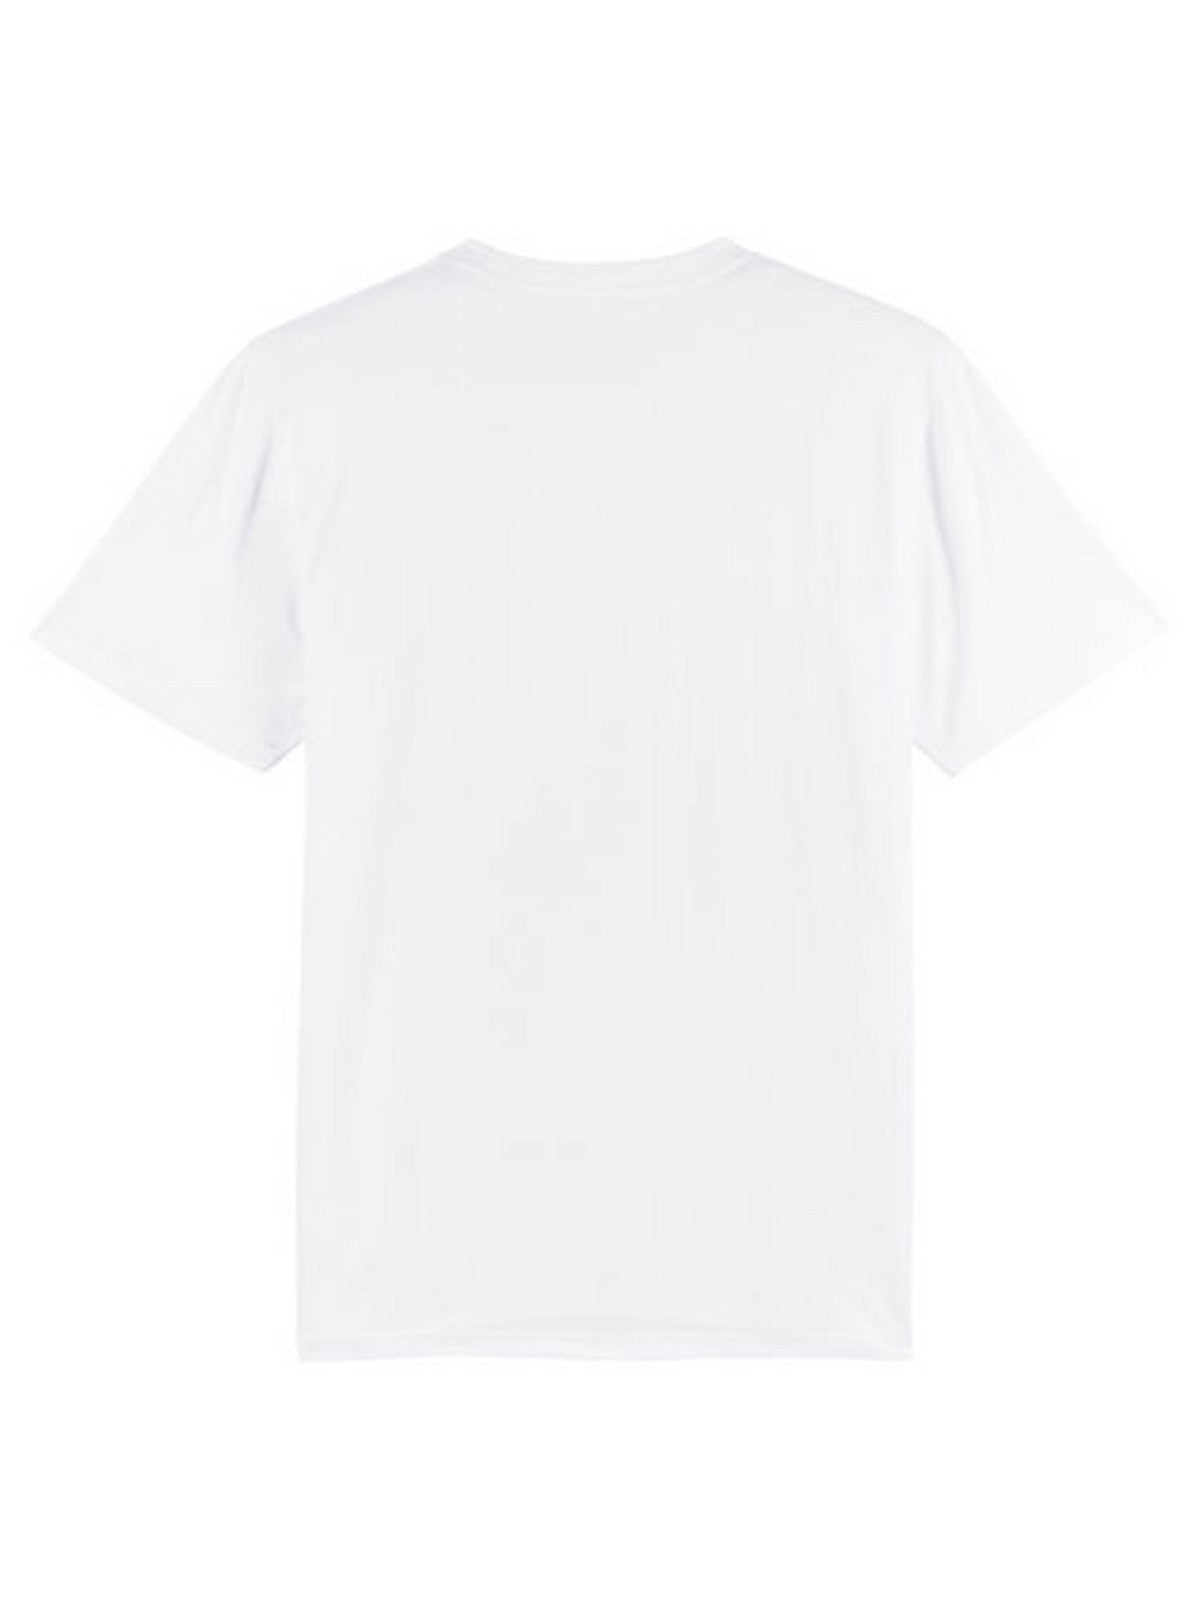 BARON FILOU T-Shirt e Polo Uomo  T-SHIRT FILOU II WHITE Bianco